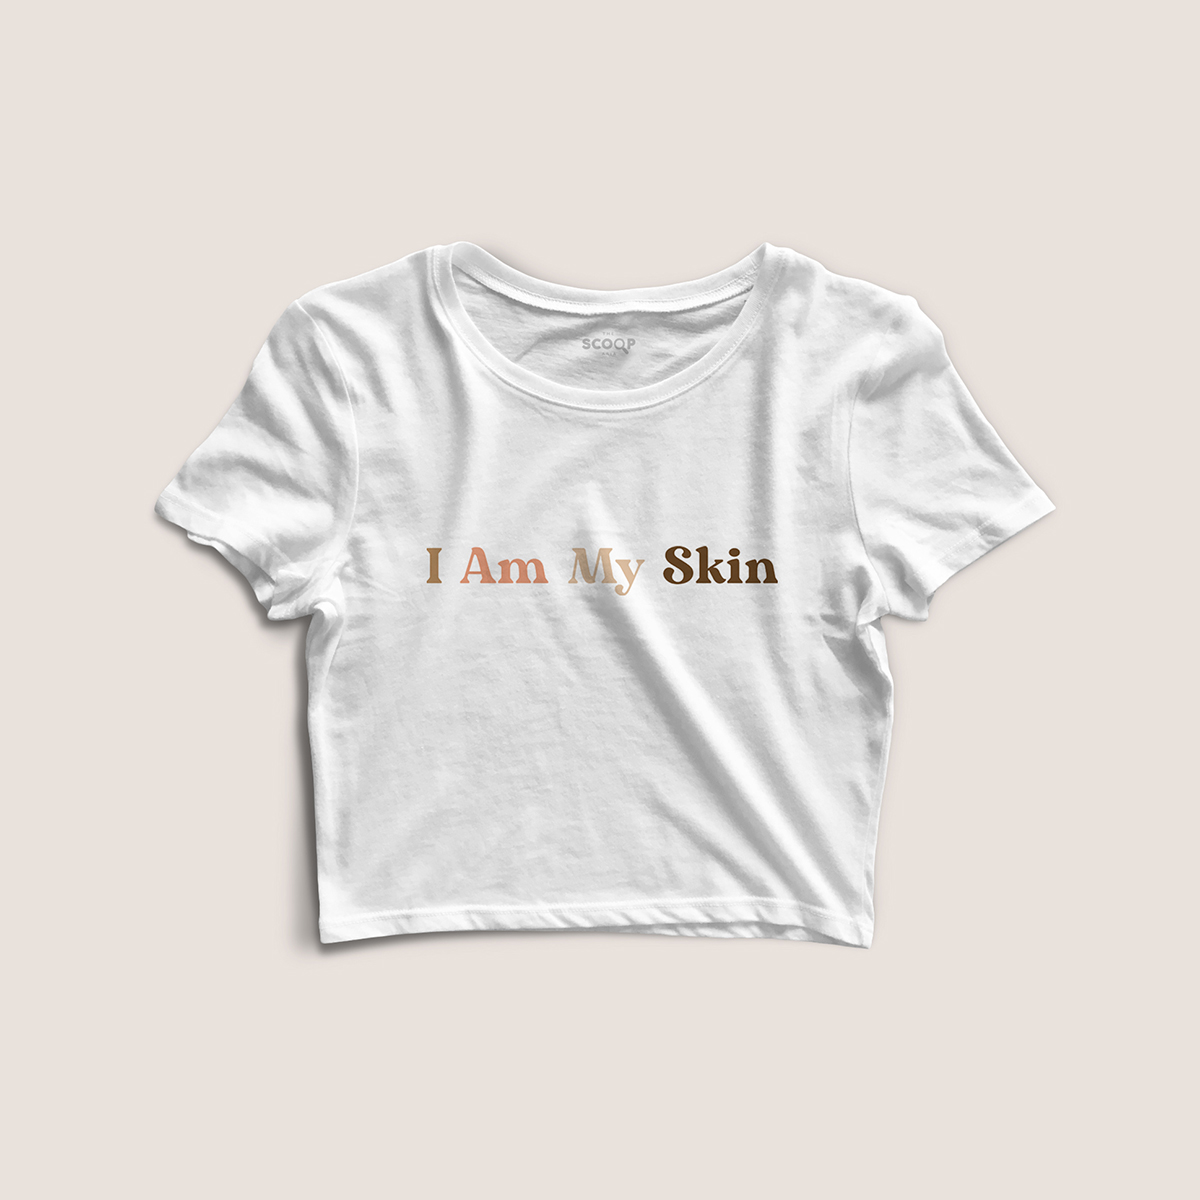 I am my skin shirt